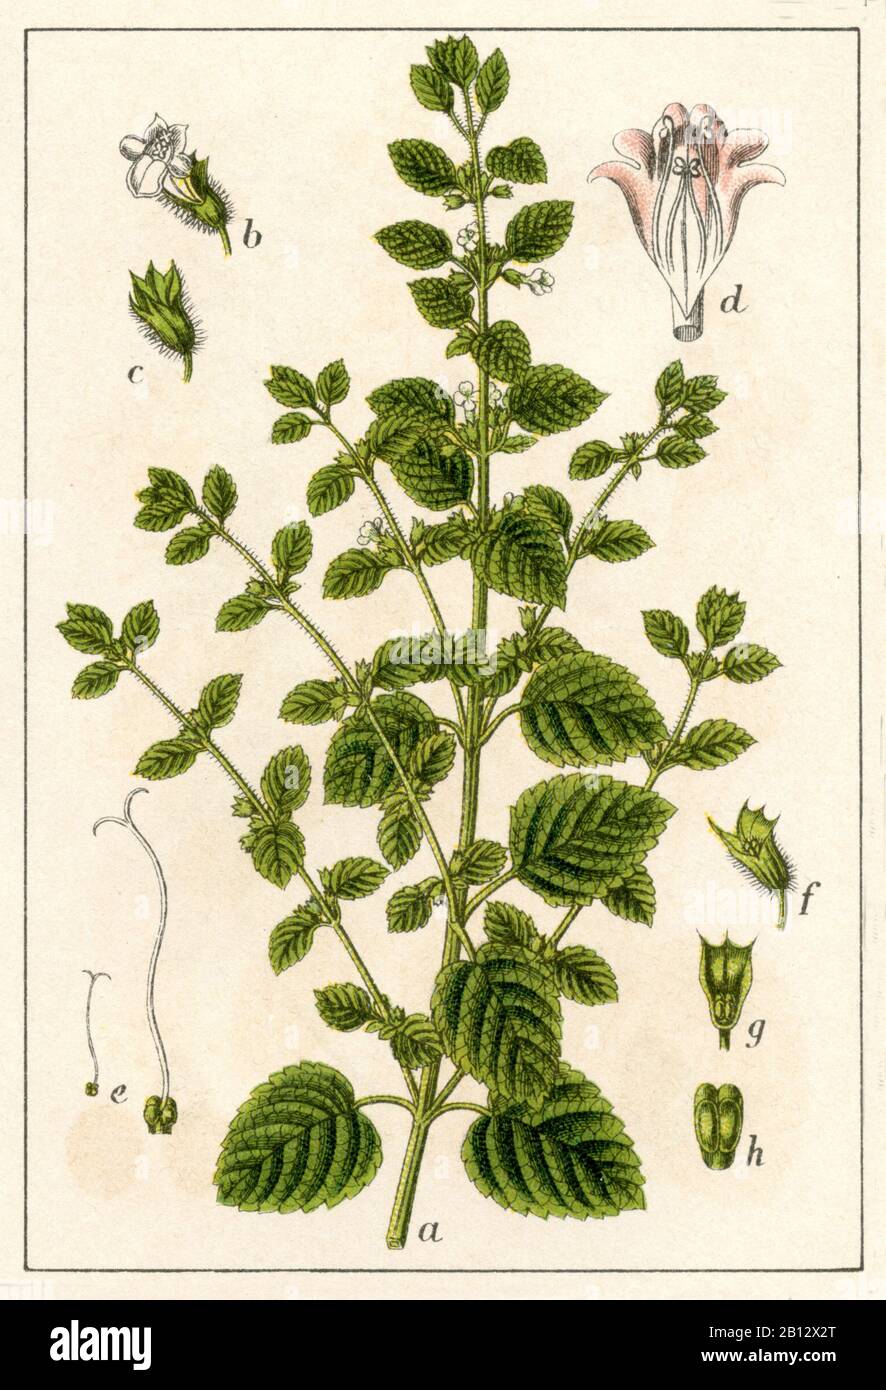 lemon balm, Melissa officinalis, Zitronenmelisse, mélisse,  (botany book, 1903) Stock Photo